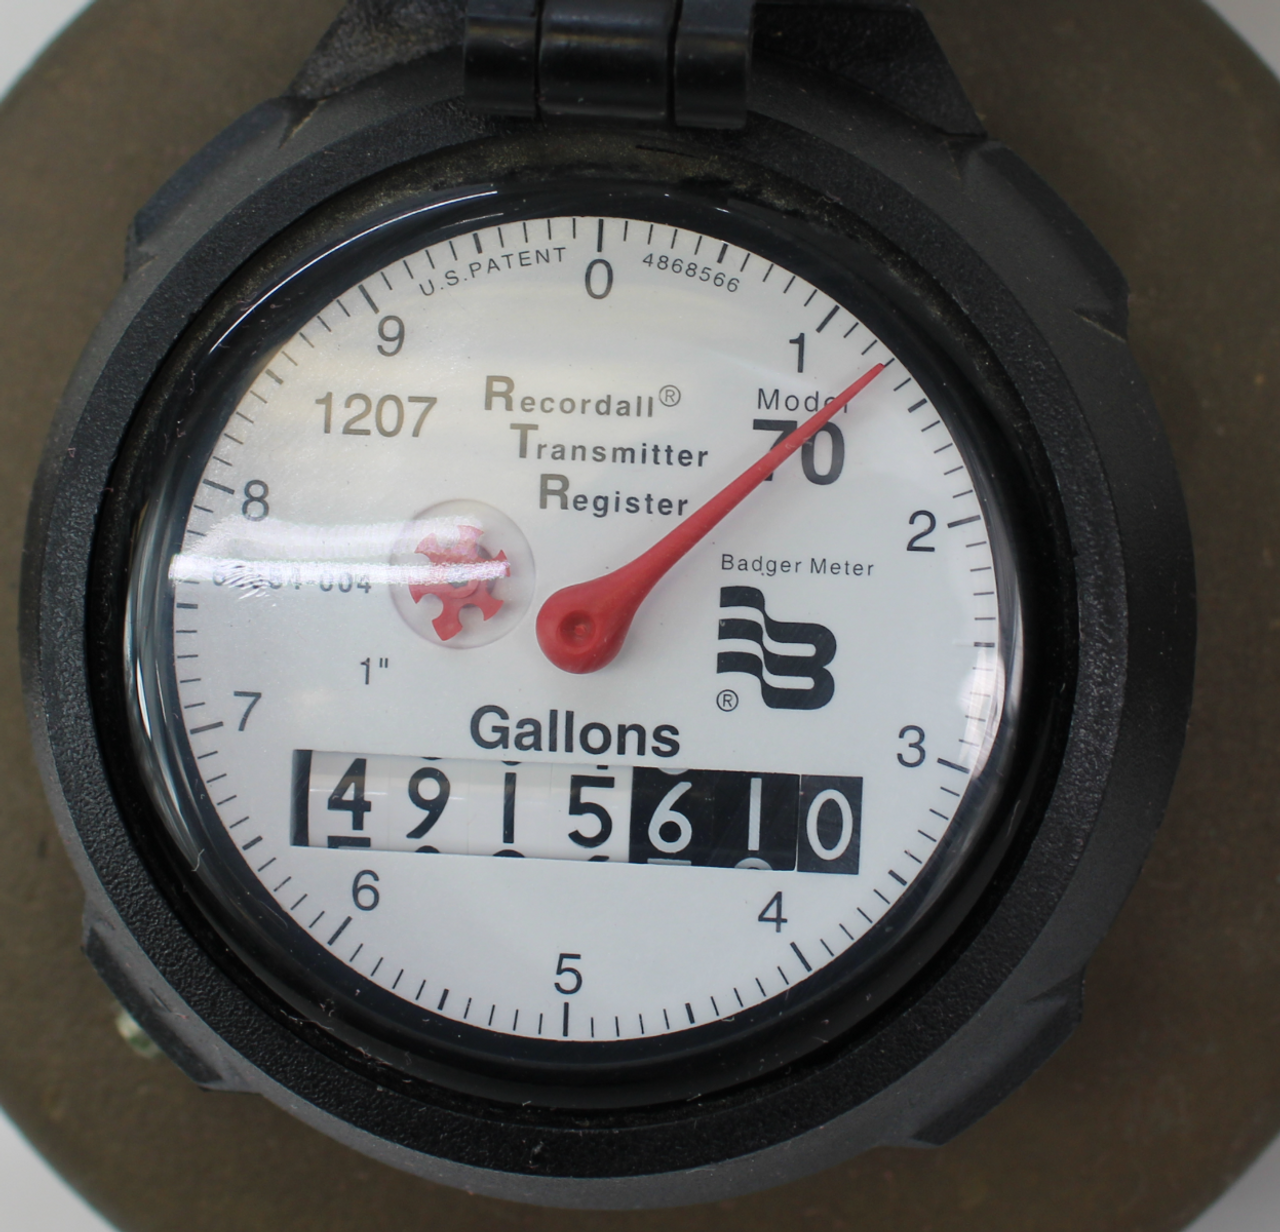 Badger Meter RCDL 70 Water Meter w/ 1" Transmitter/Register